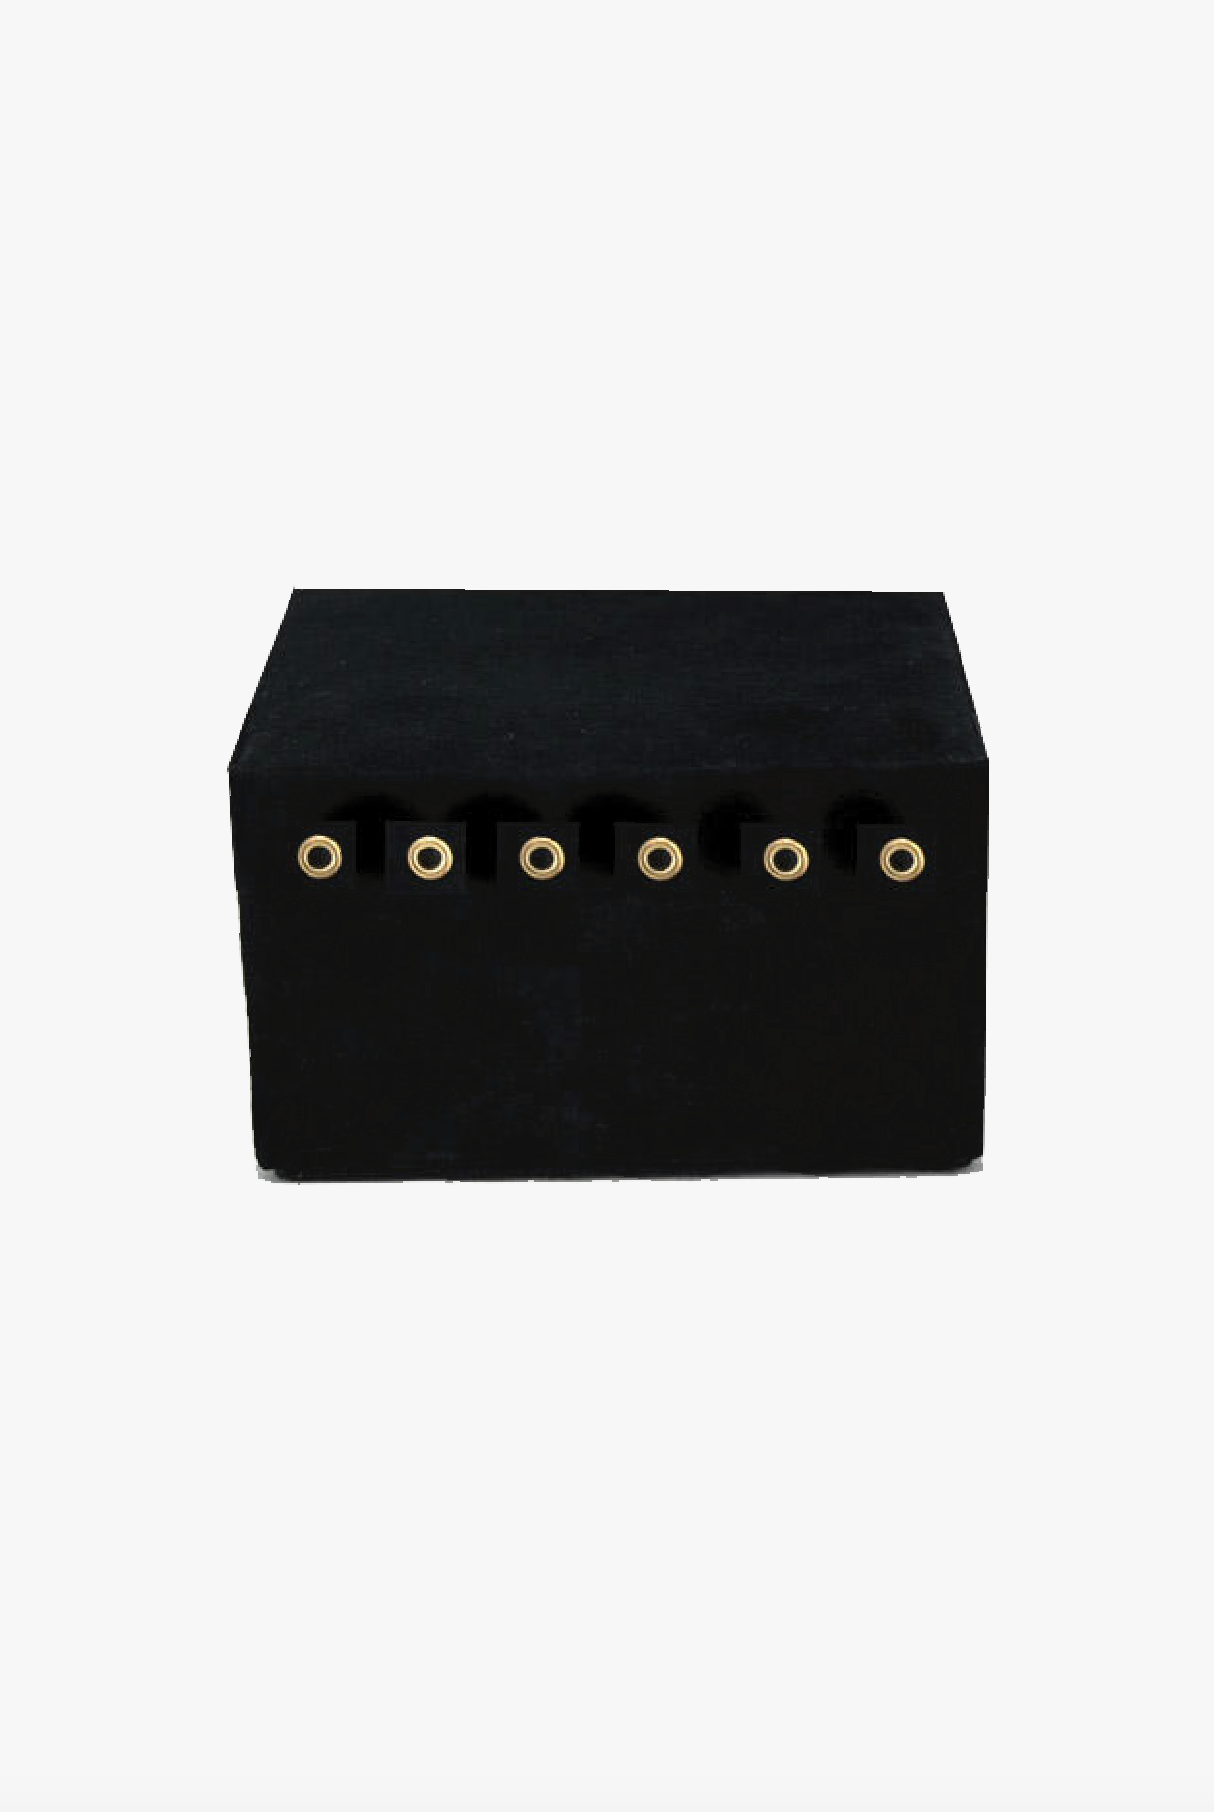 Alexander - black suede box with studded detail www.auralondon.com